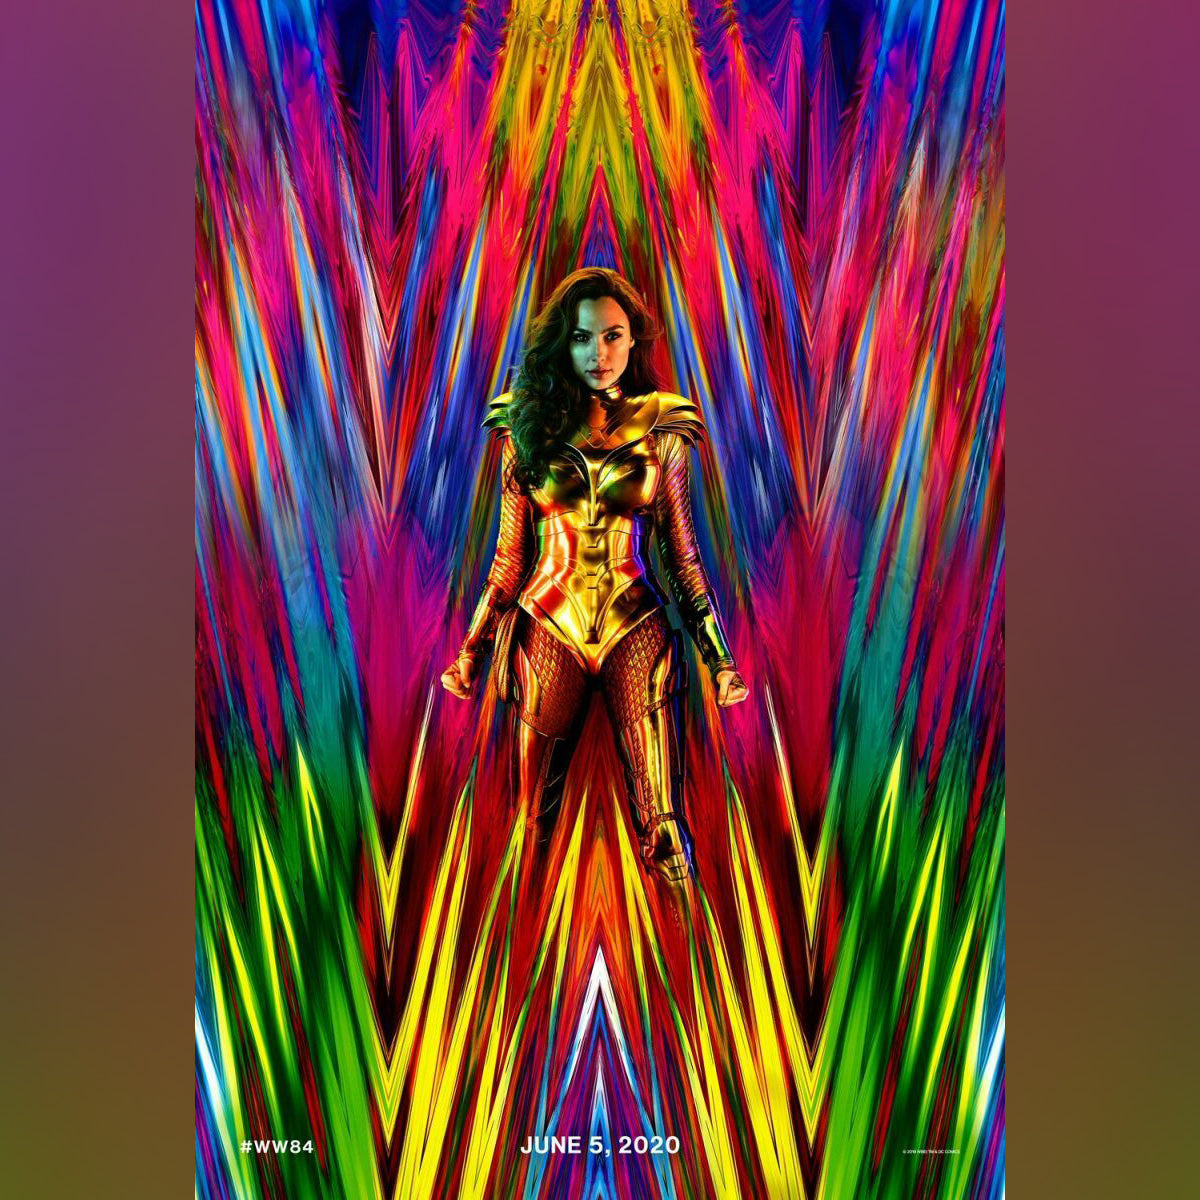 Original Movie Poster of Wonder Woman 1984 (2020)